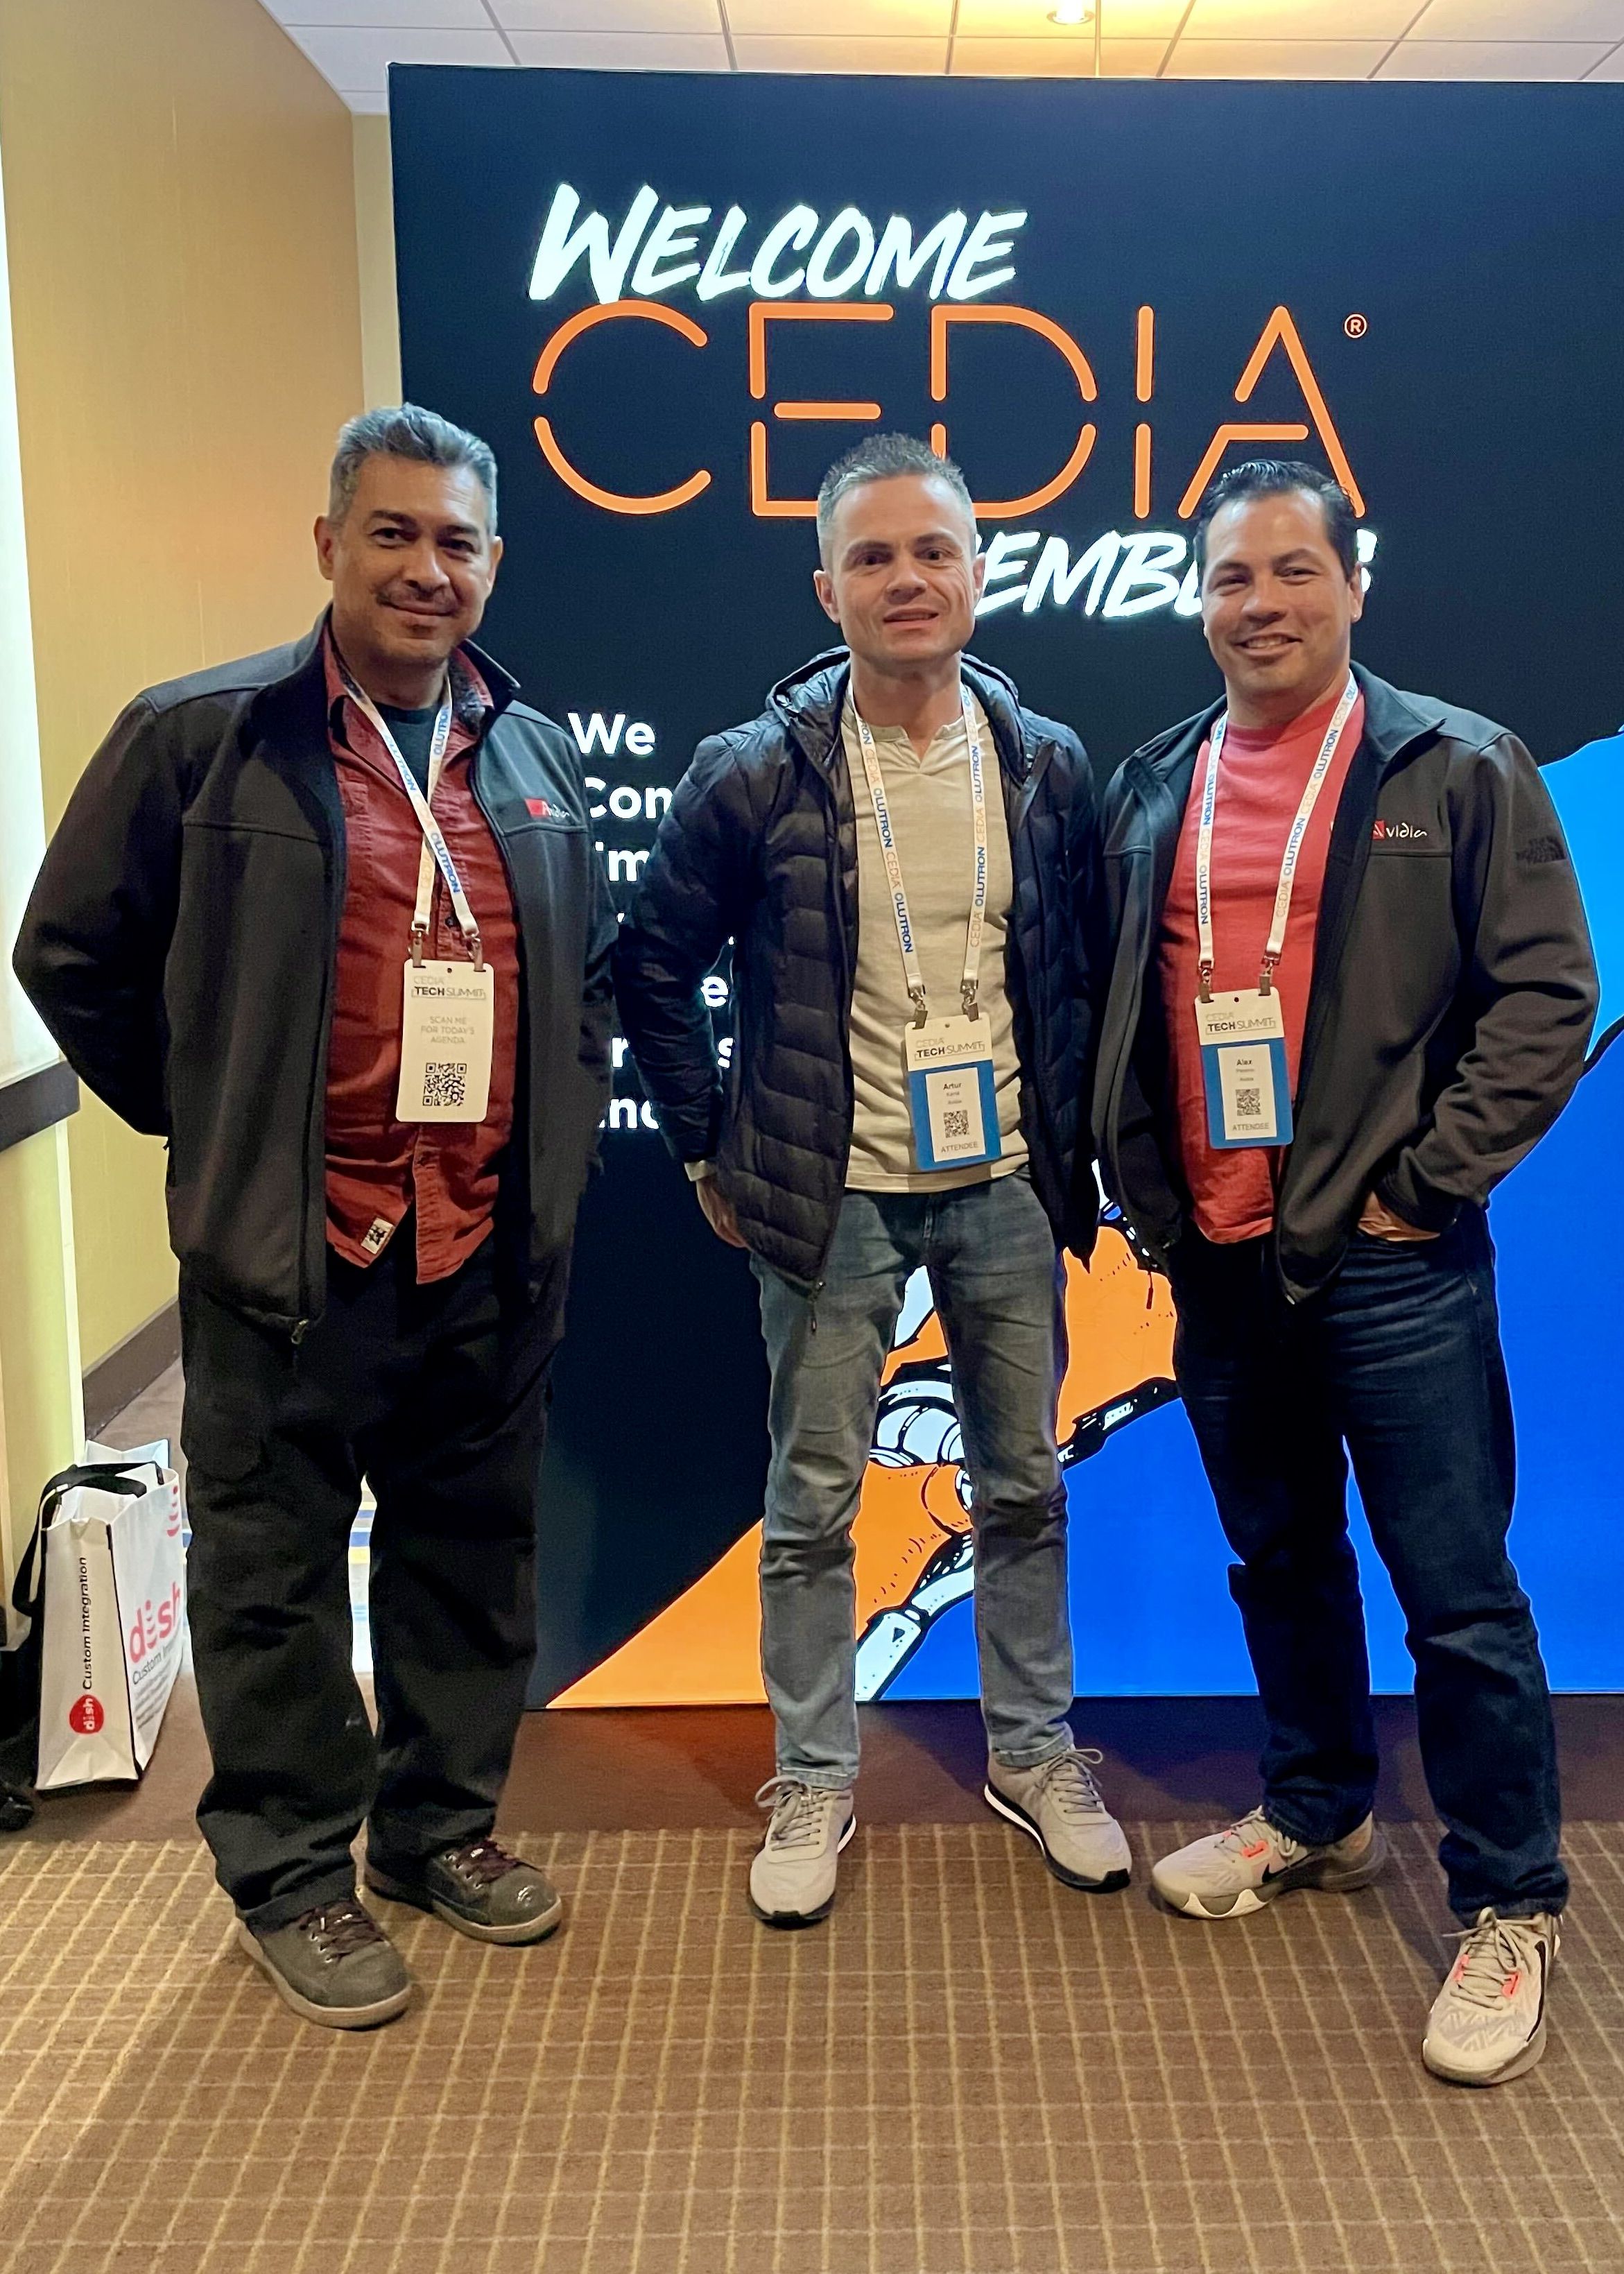 Avidia team members attend CEDIA event